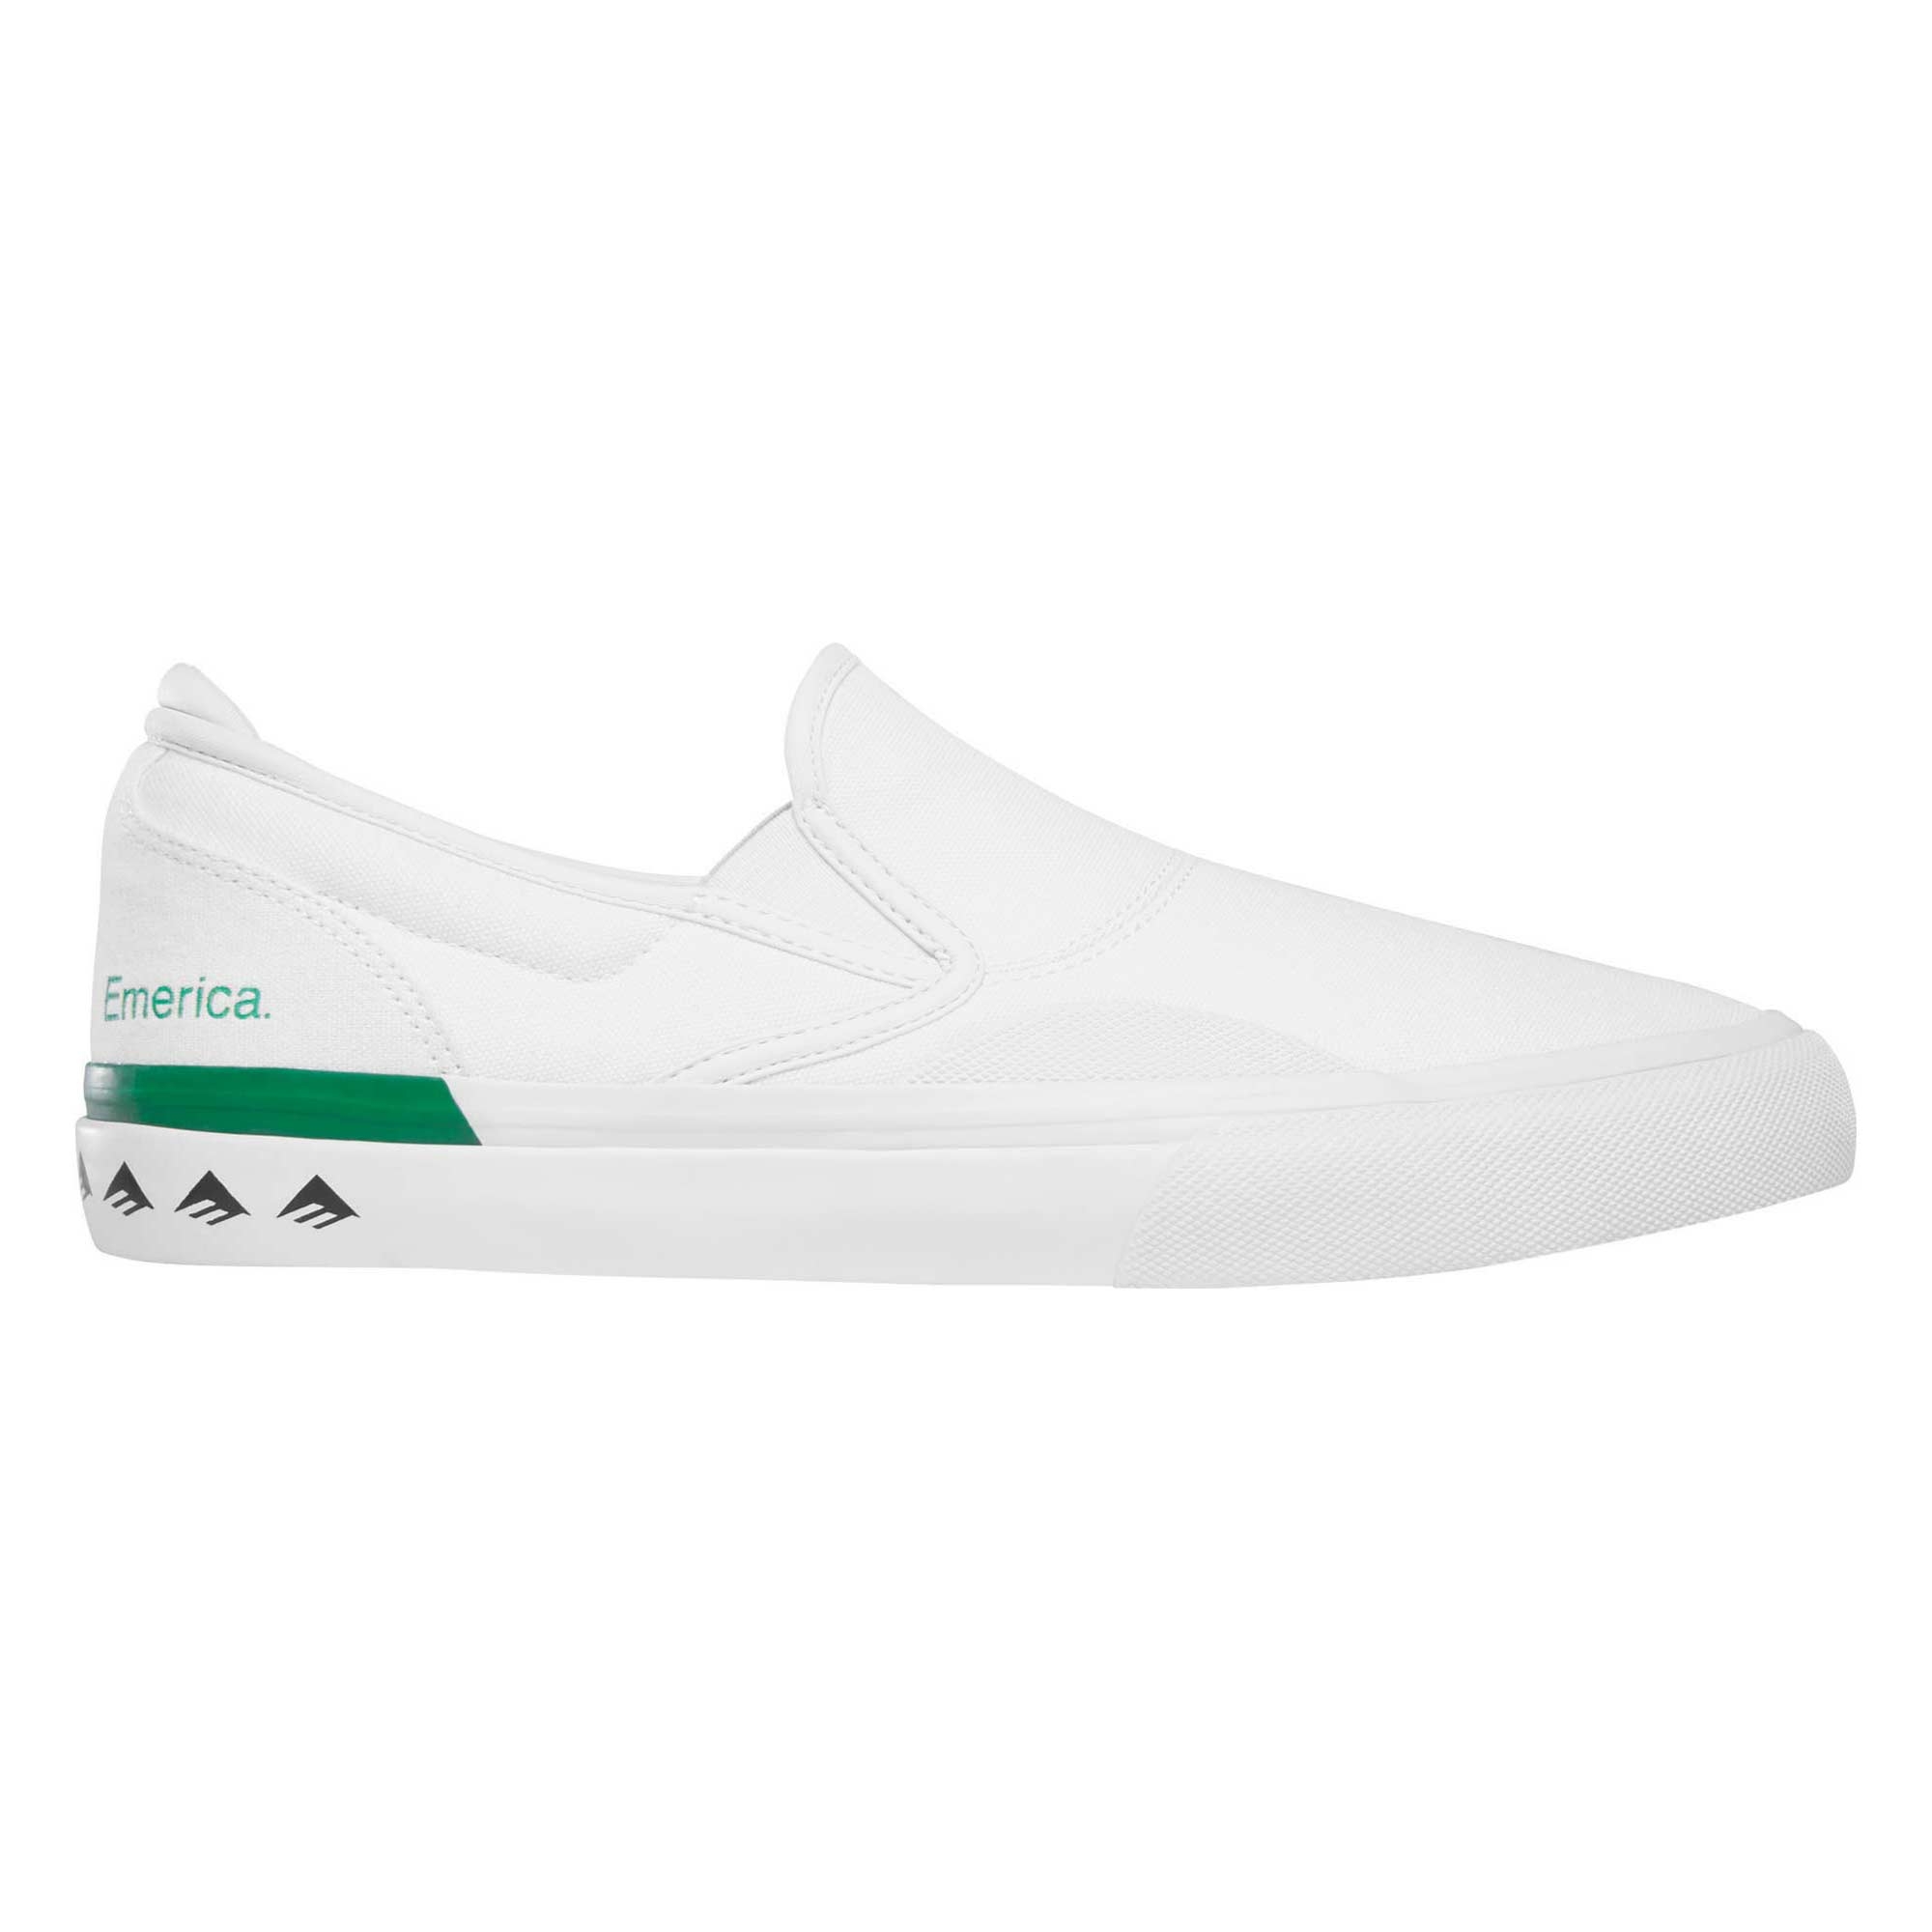 EMERICA Shoe WINO G6 SLIP-ON whi/gre, white/green